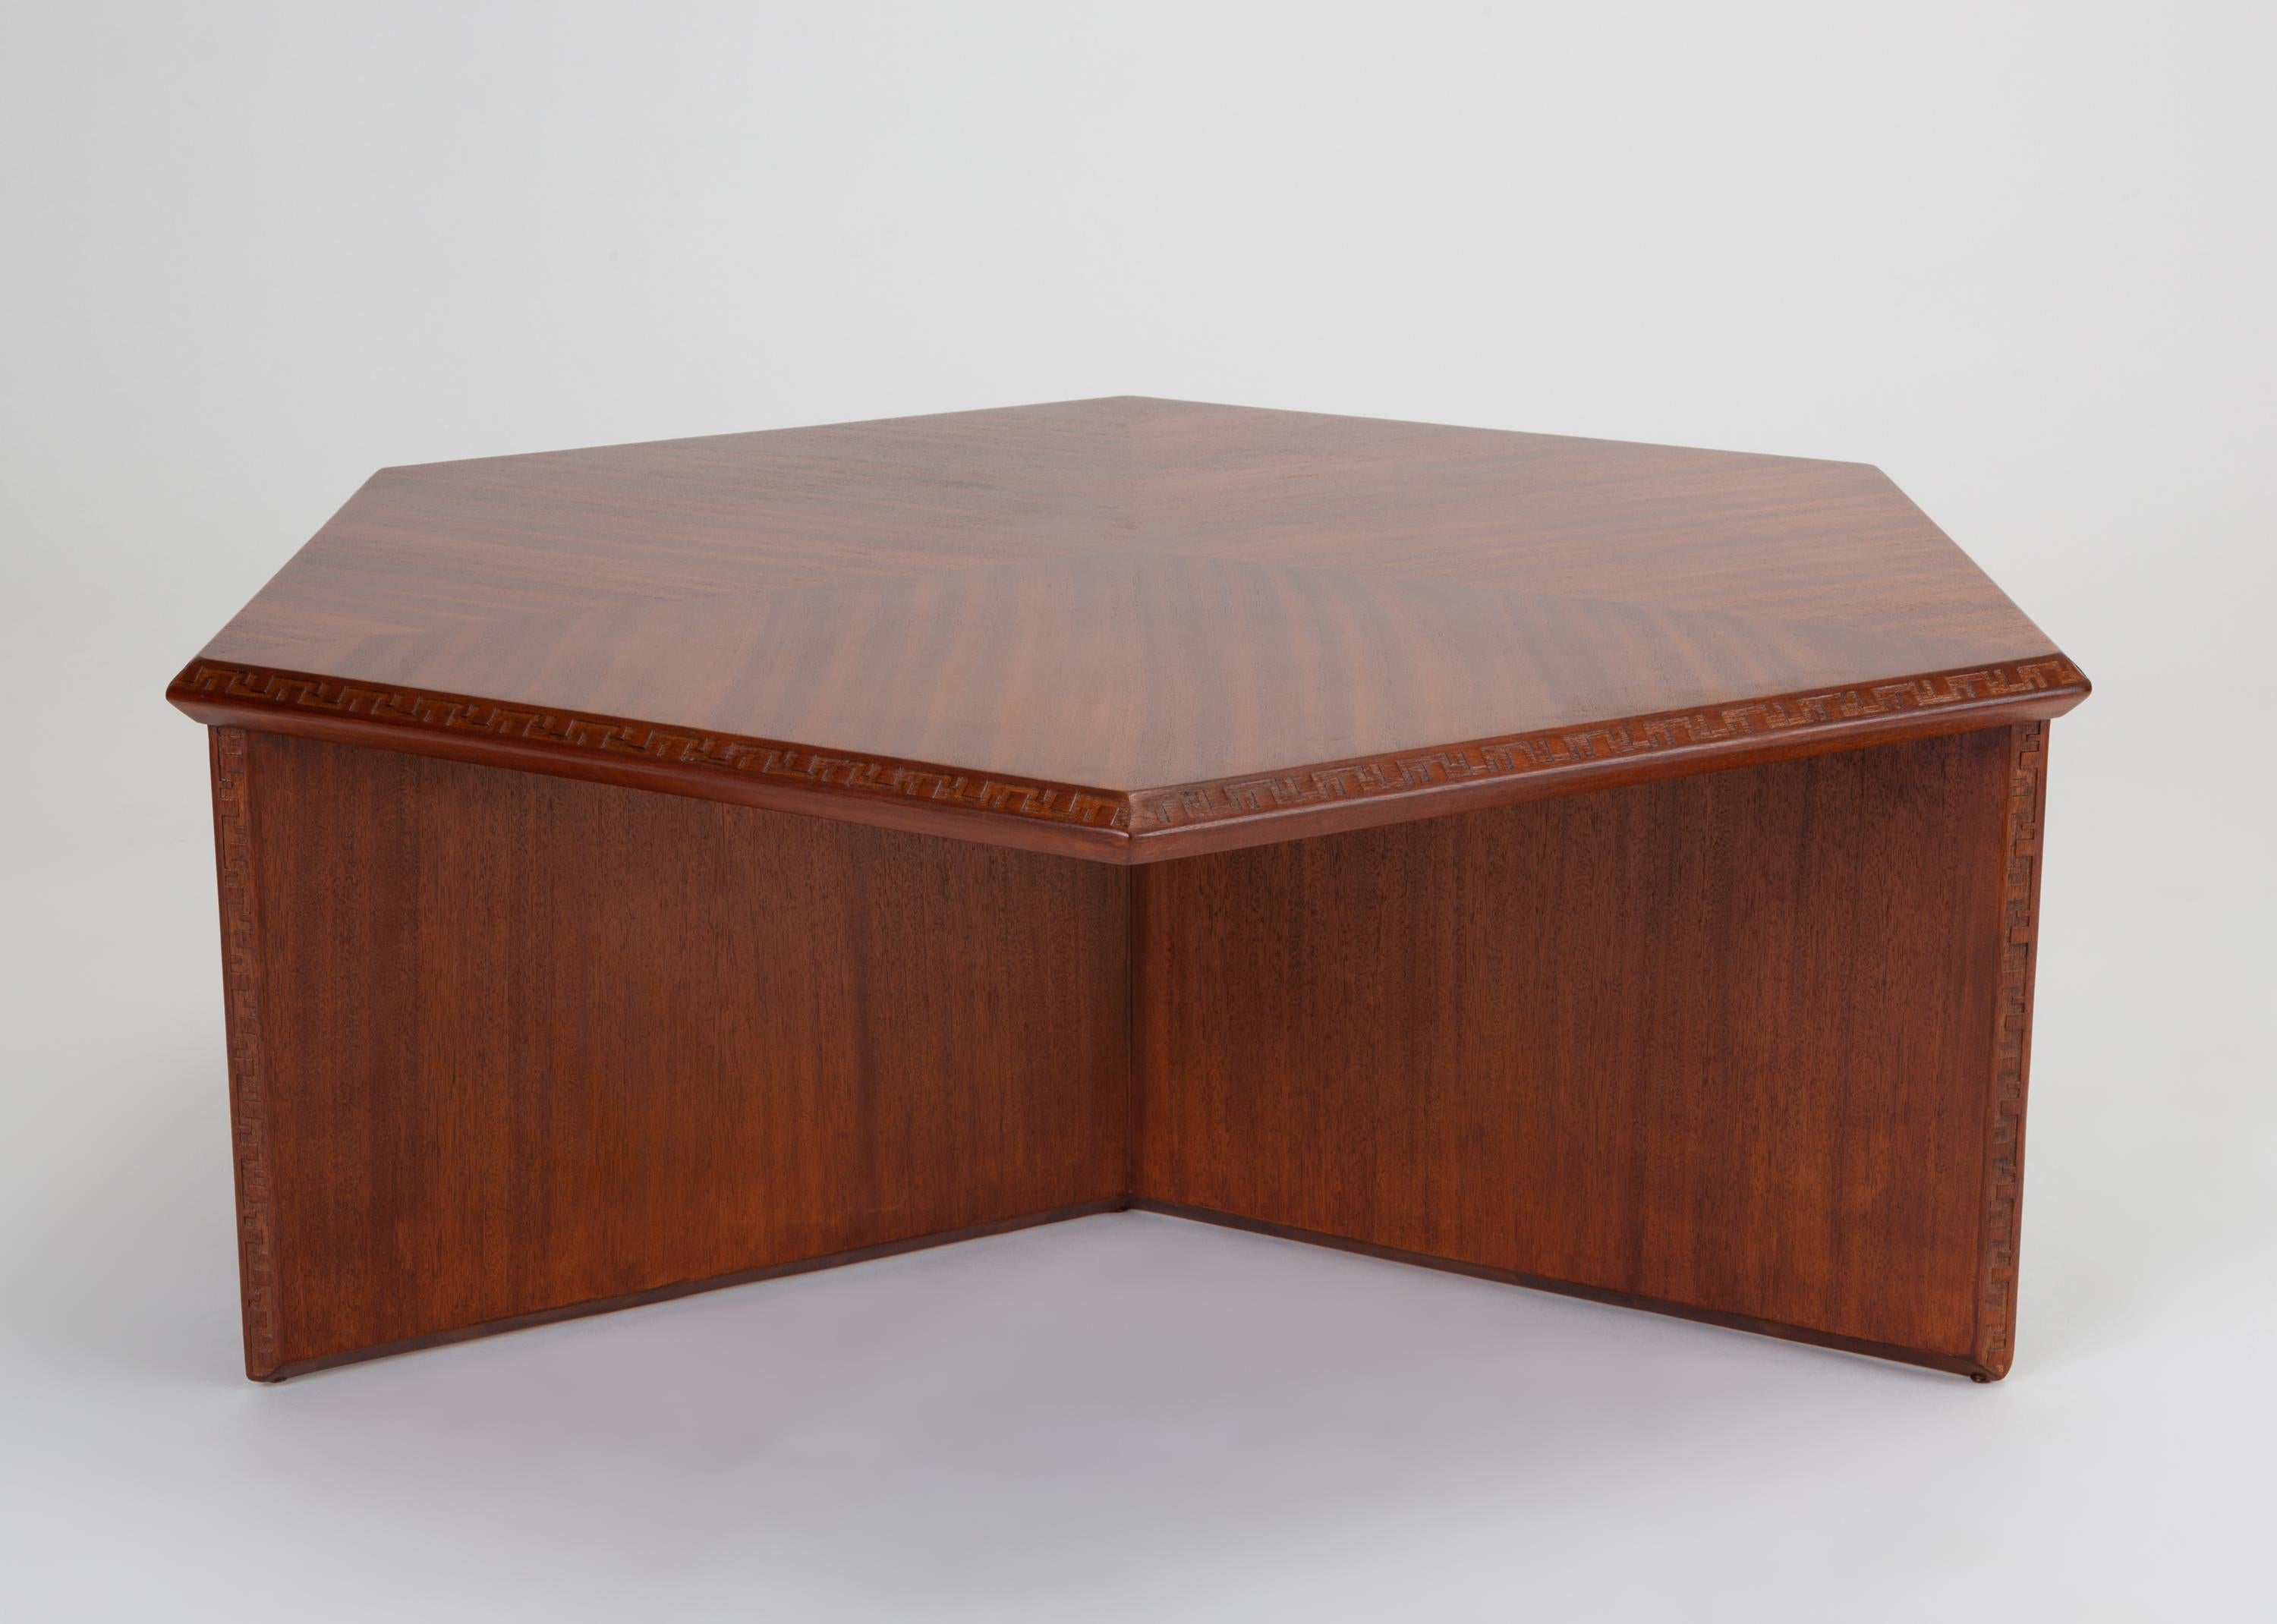 Mahogany Frank Lloyd Wright “Taliesin” Coffee Table for Heritage-Henredon